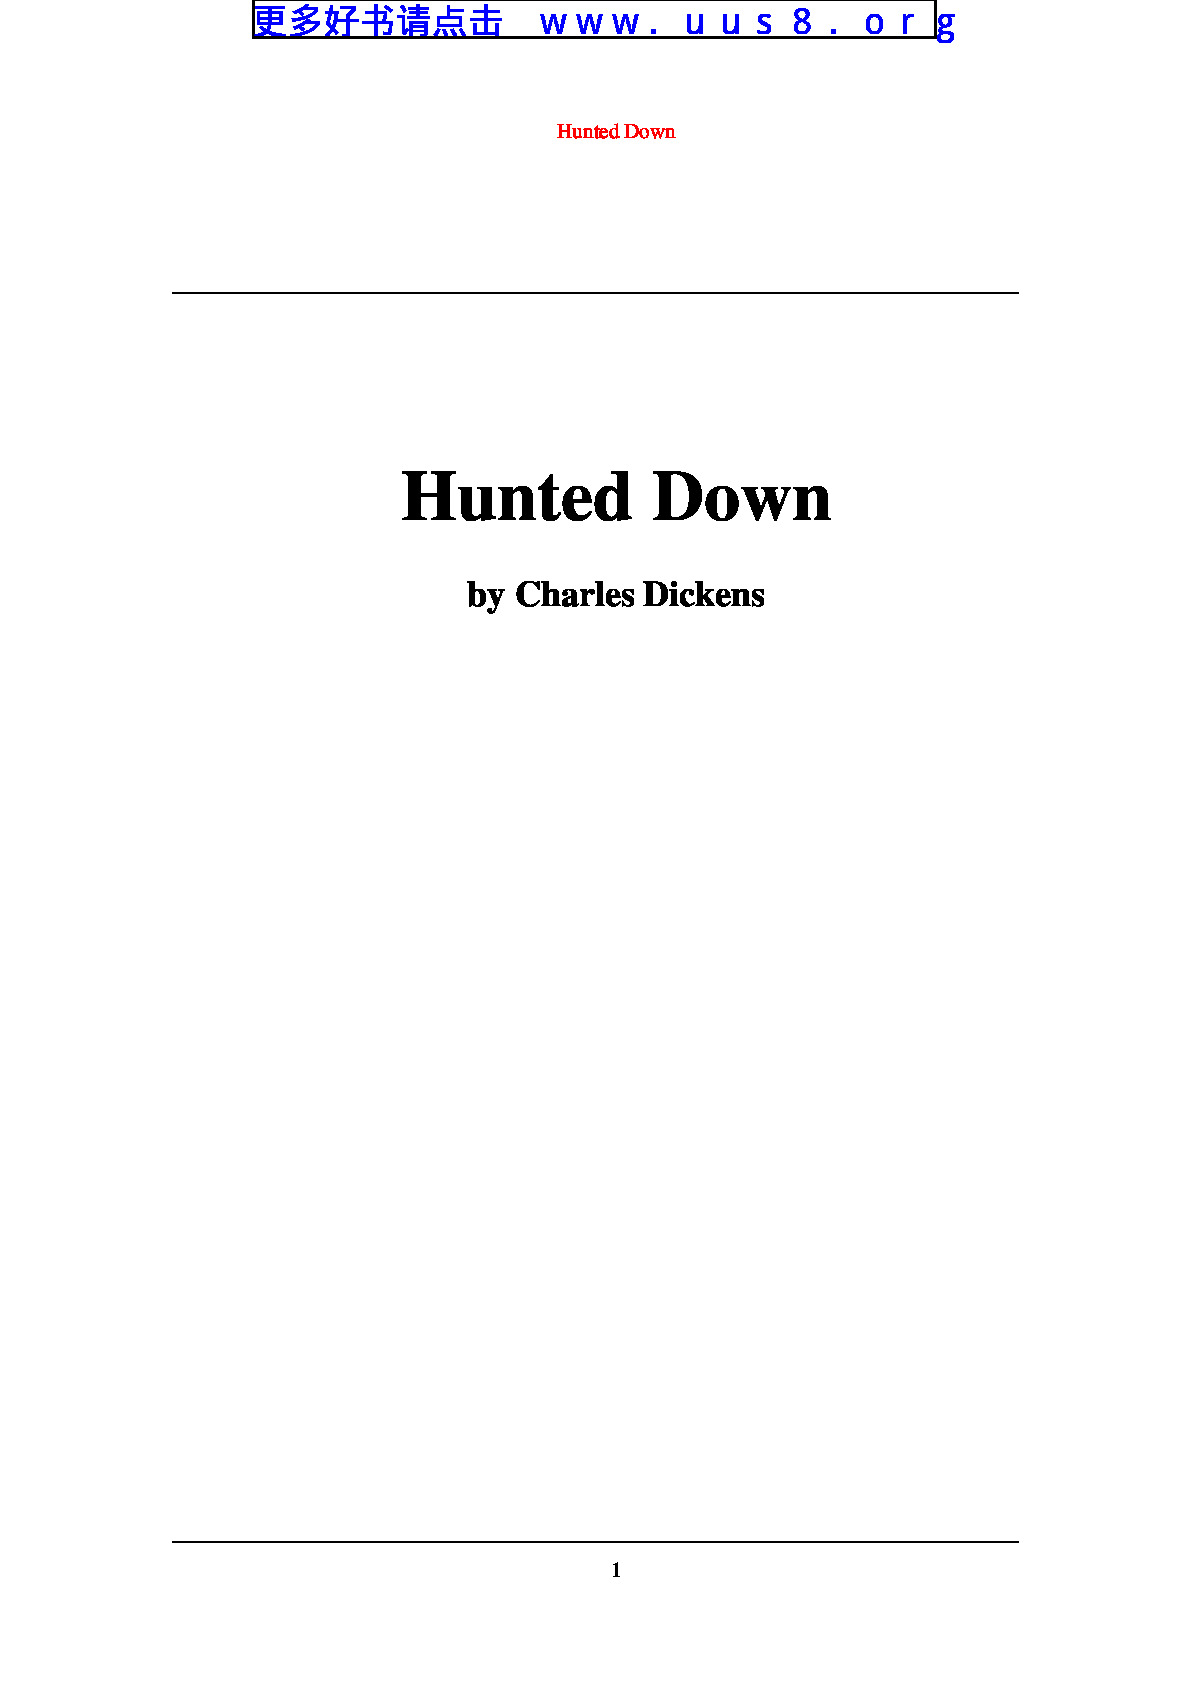 Hunted_Down(被猎)